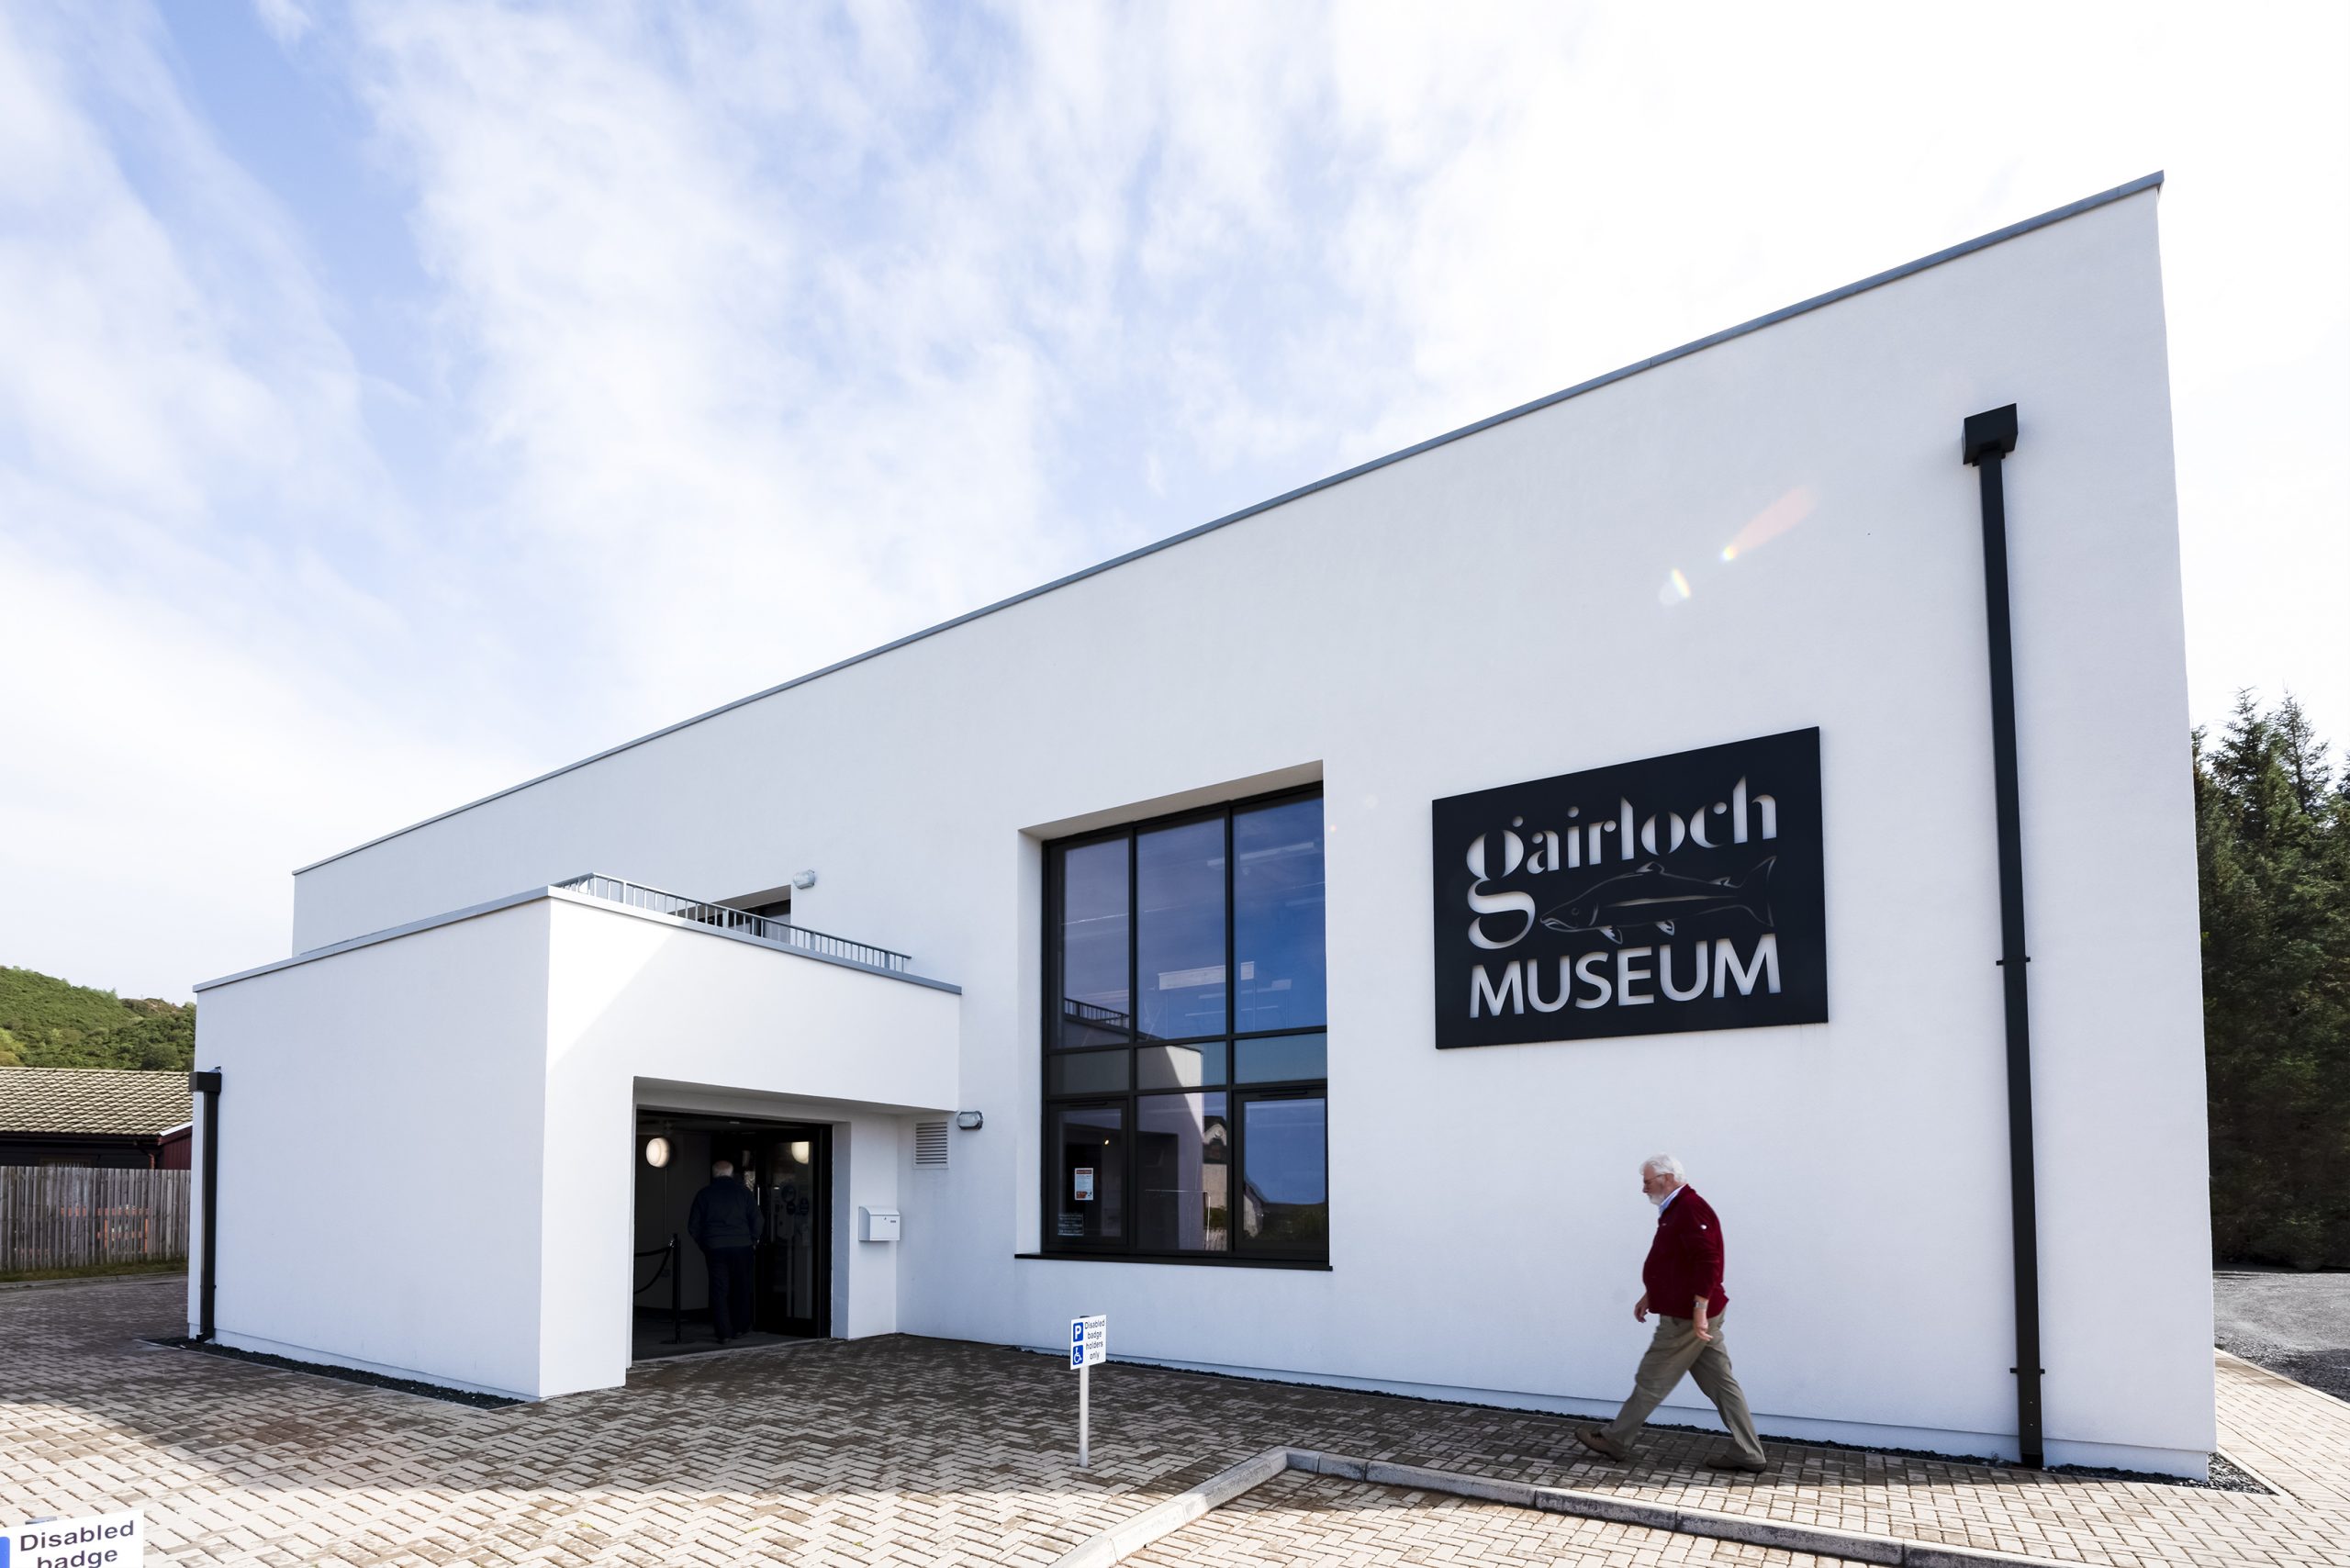 Image showing Gairloch Museum